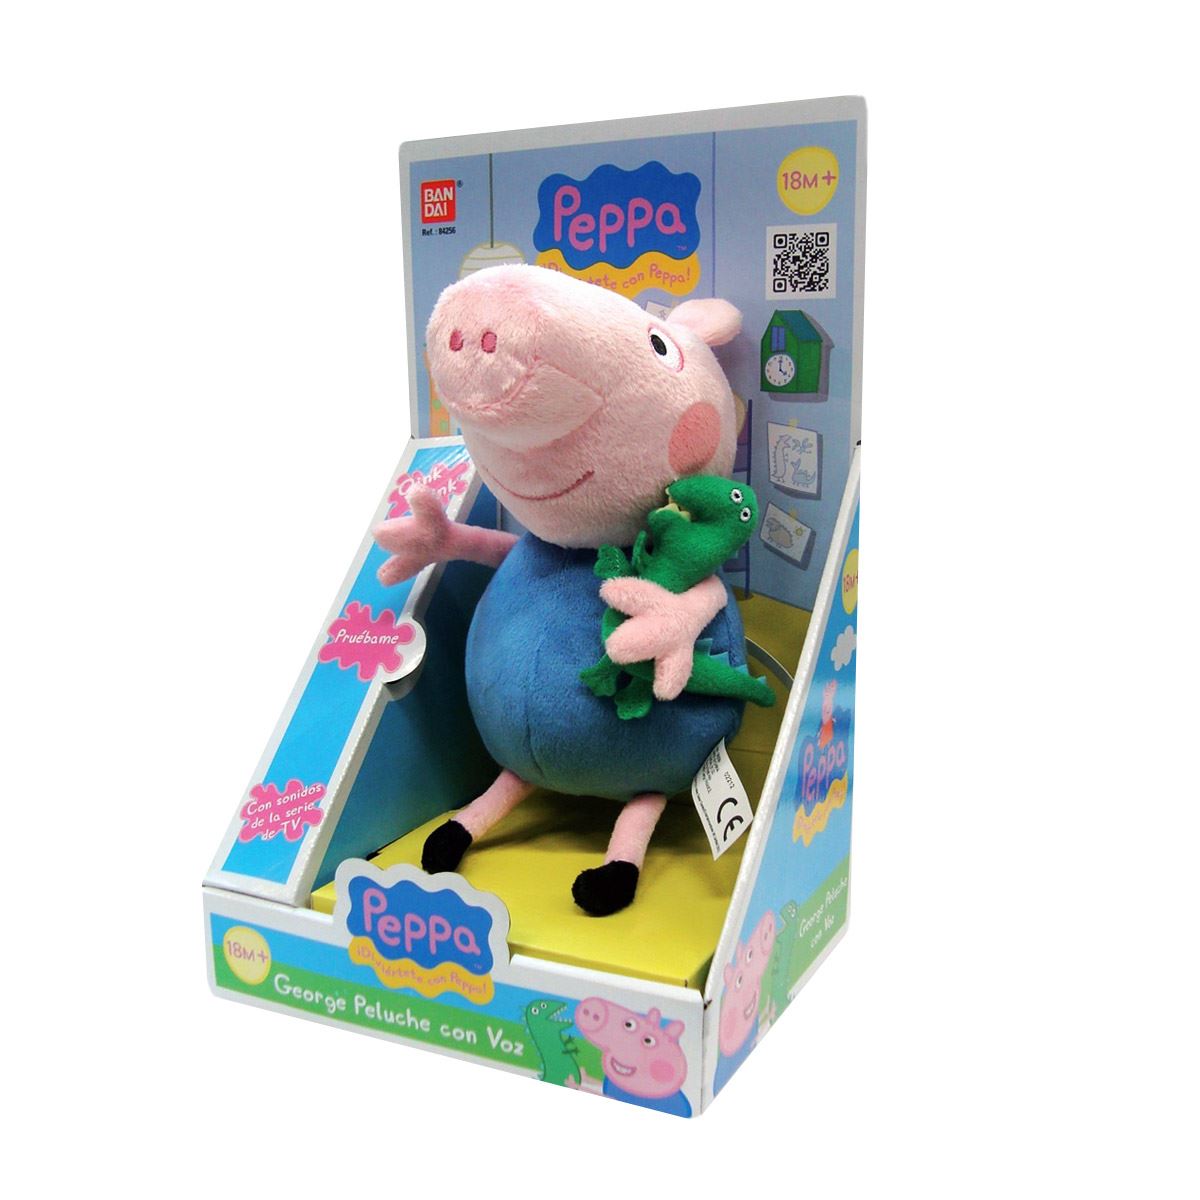 Peppa Pig Feature plush George